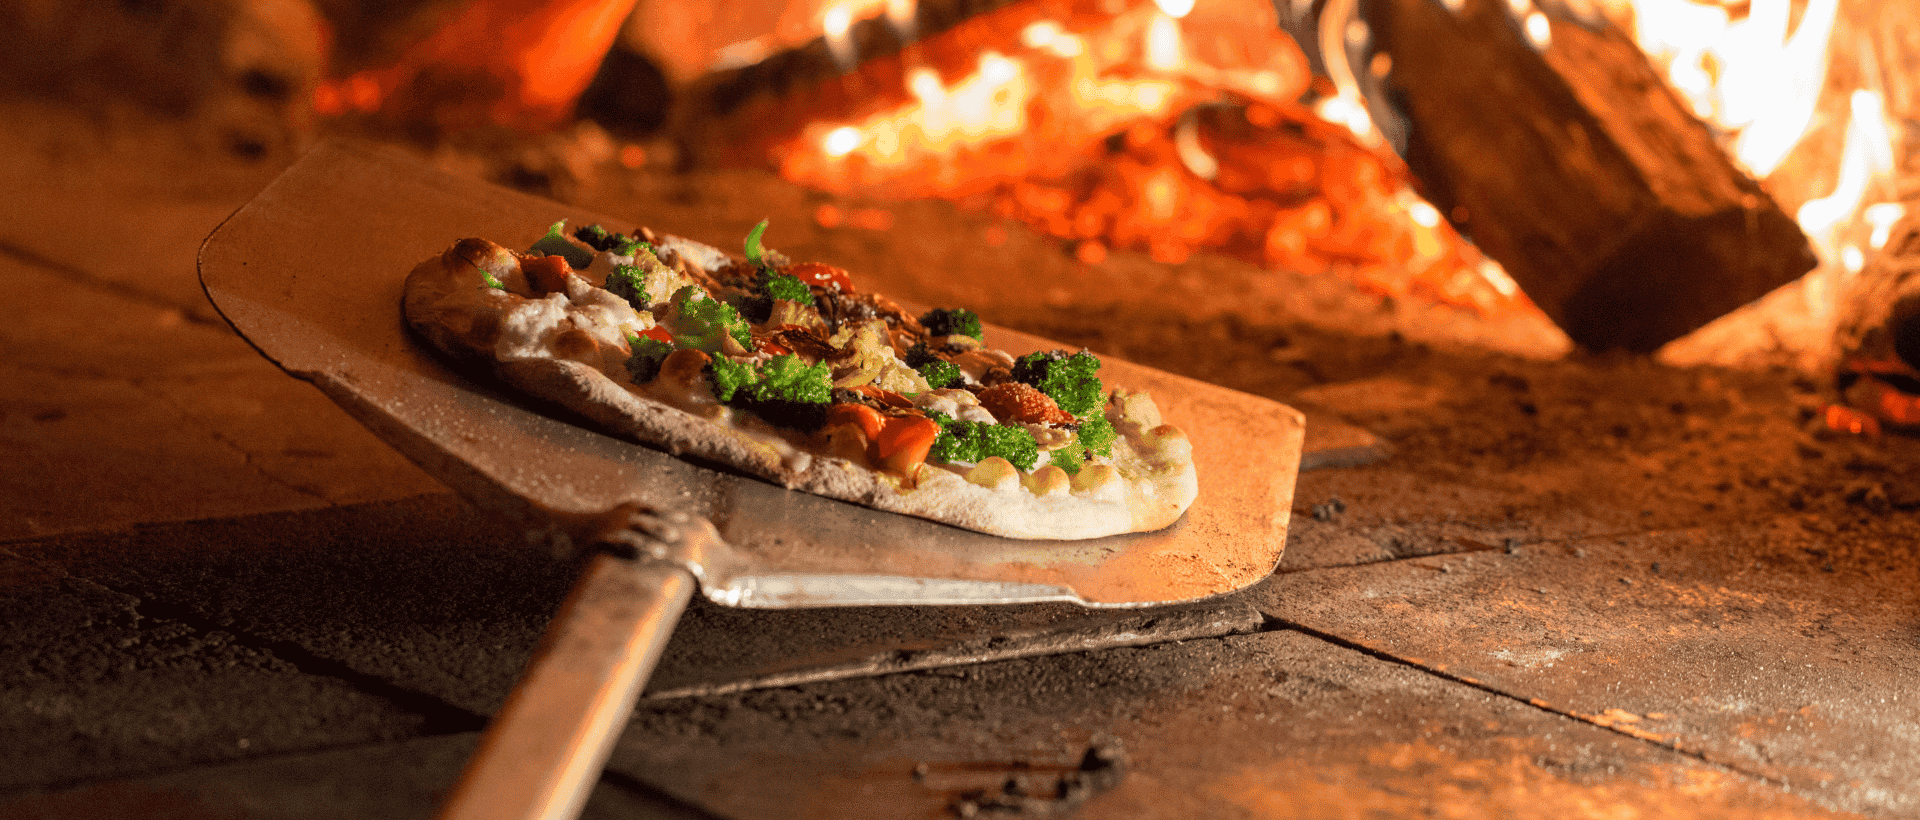 A pizza in a Bertucci's brick oven